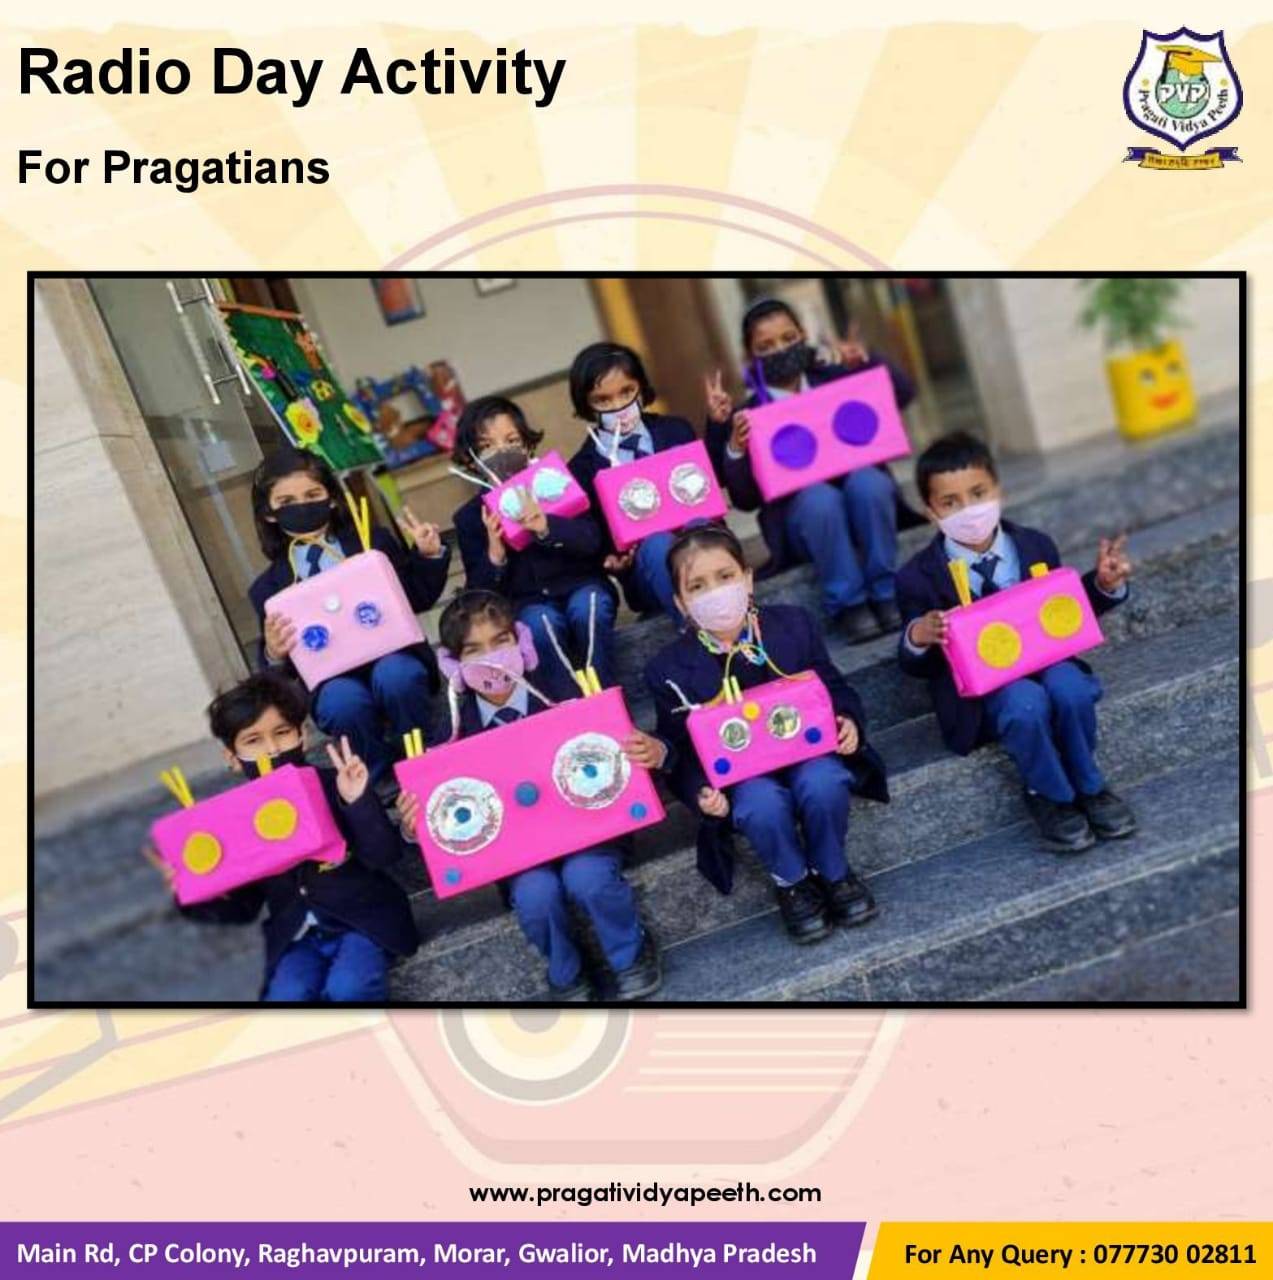 Radio Day Activity for Pragatians